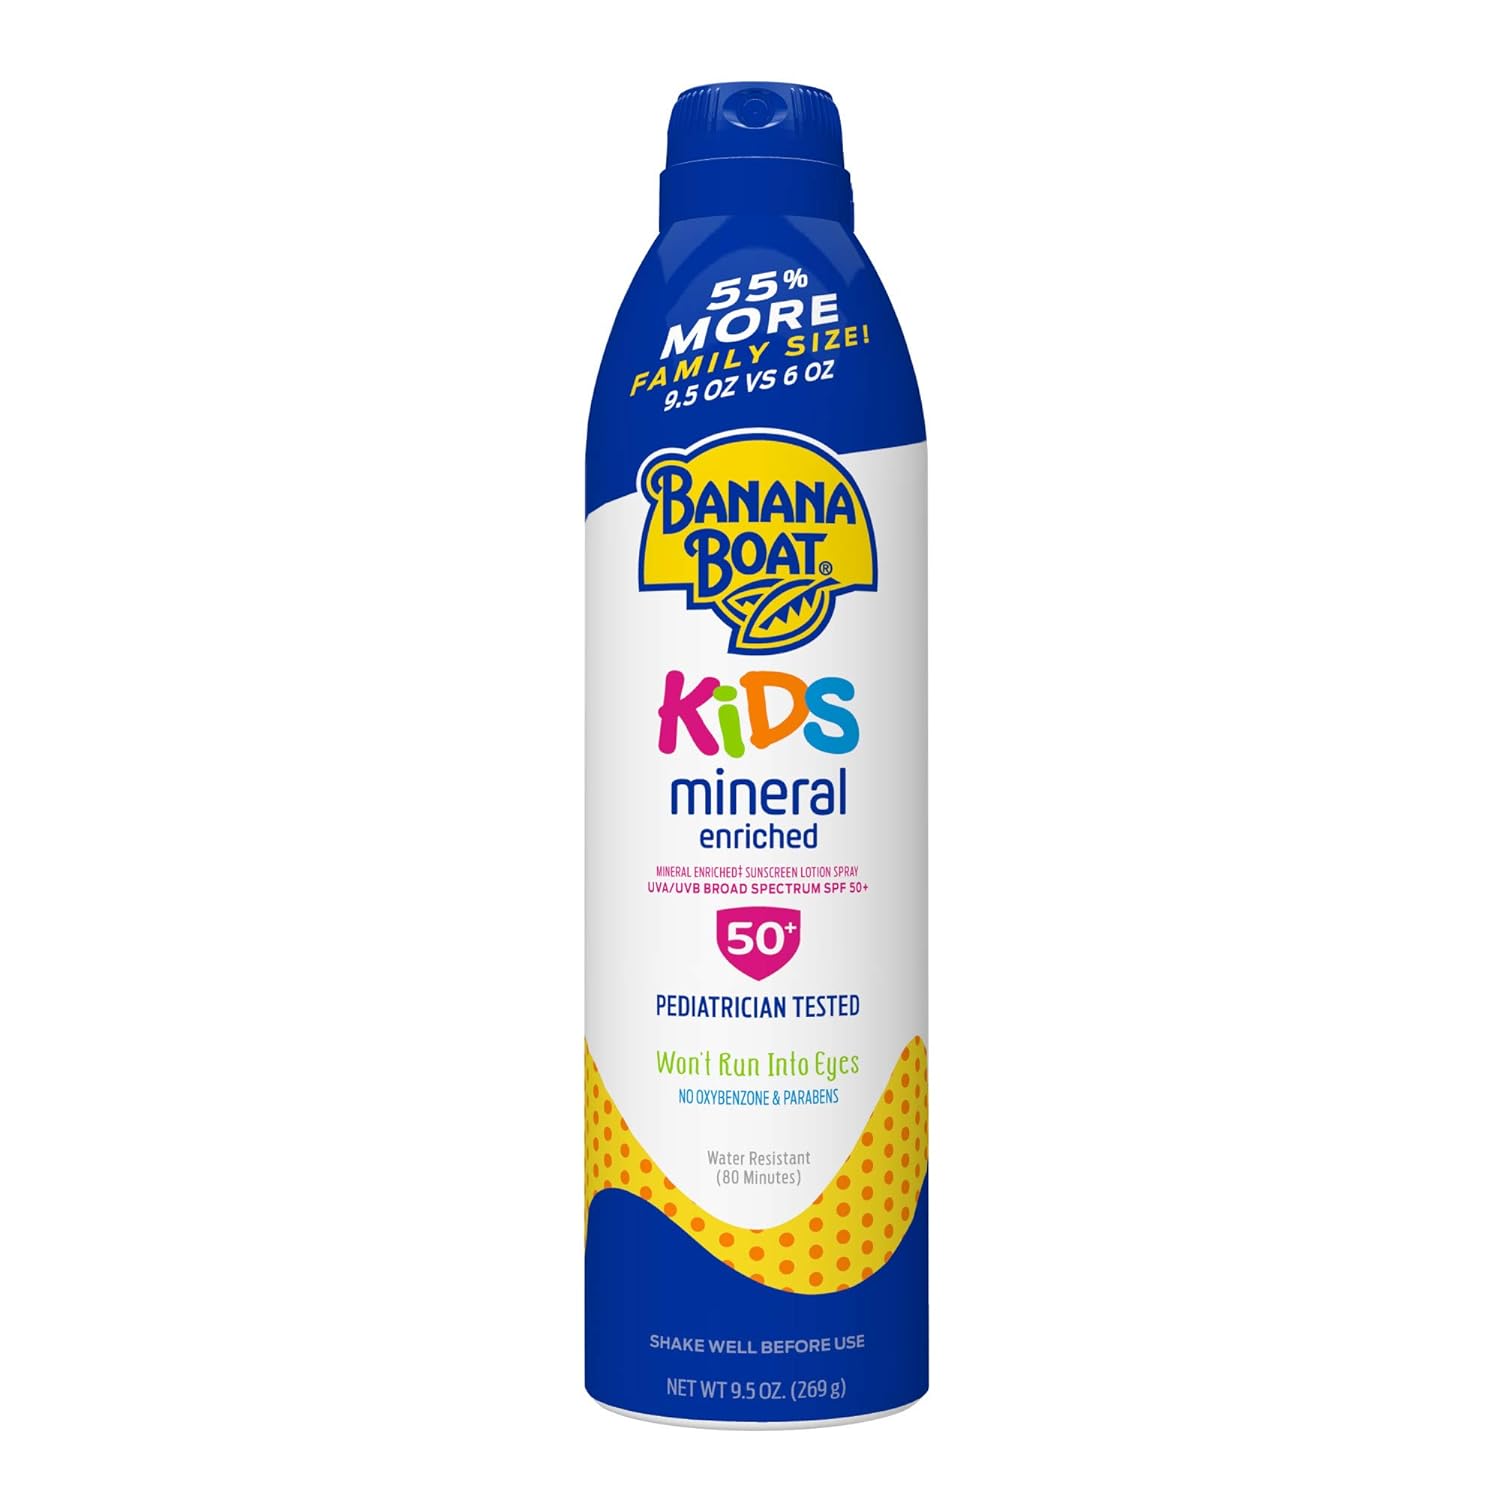 Banana Boat Kids Mineral Enriched, Broad Spectrum Sunscreen, SPF 50+, Pack of 1, 9.5 oz